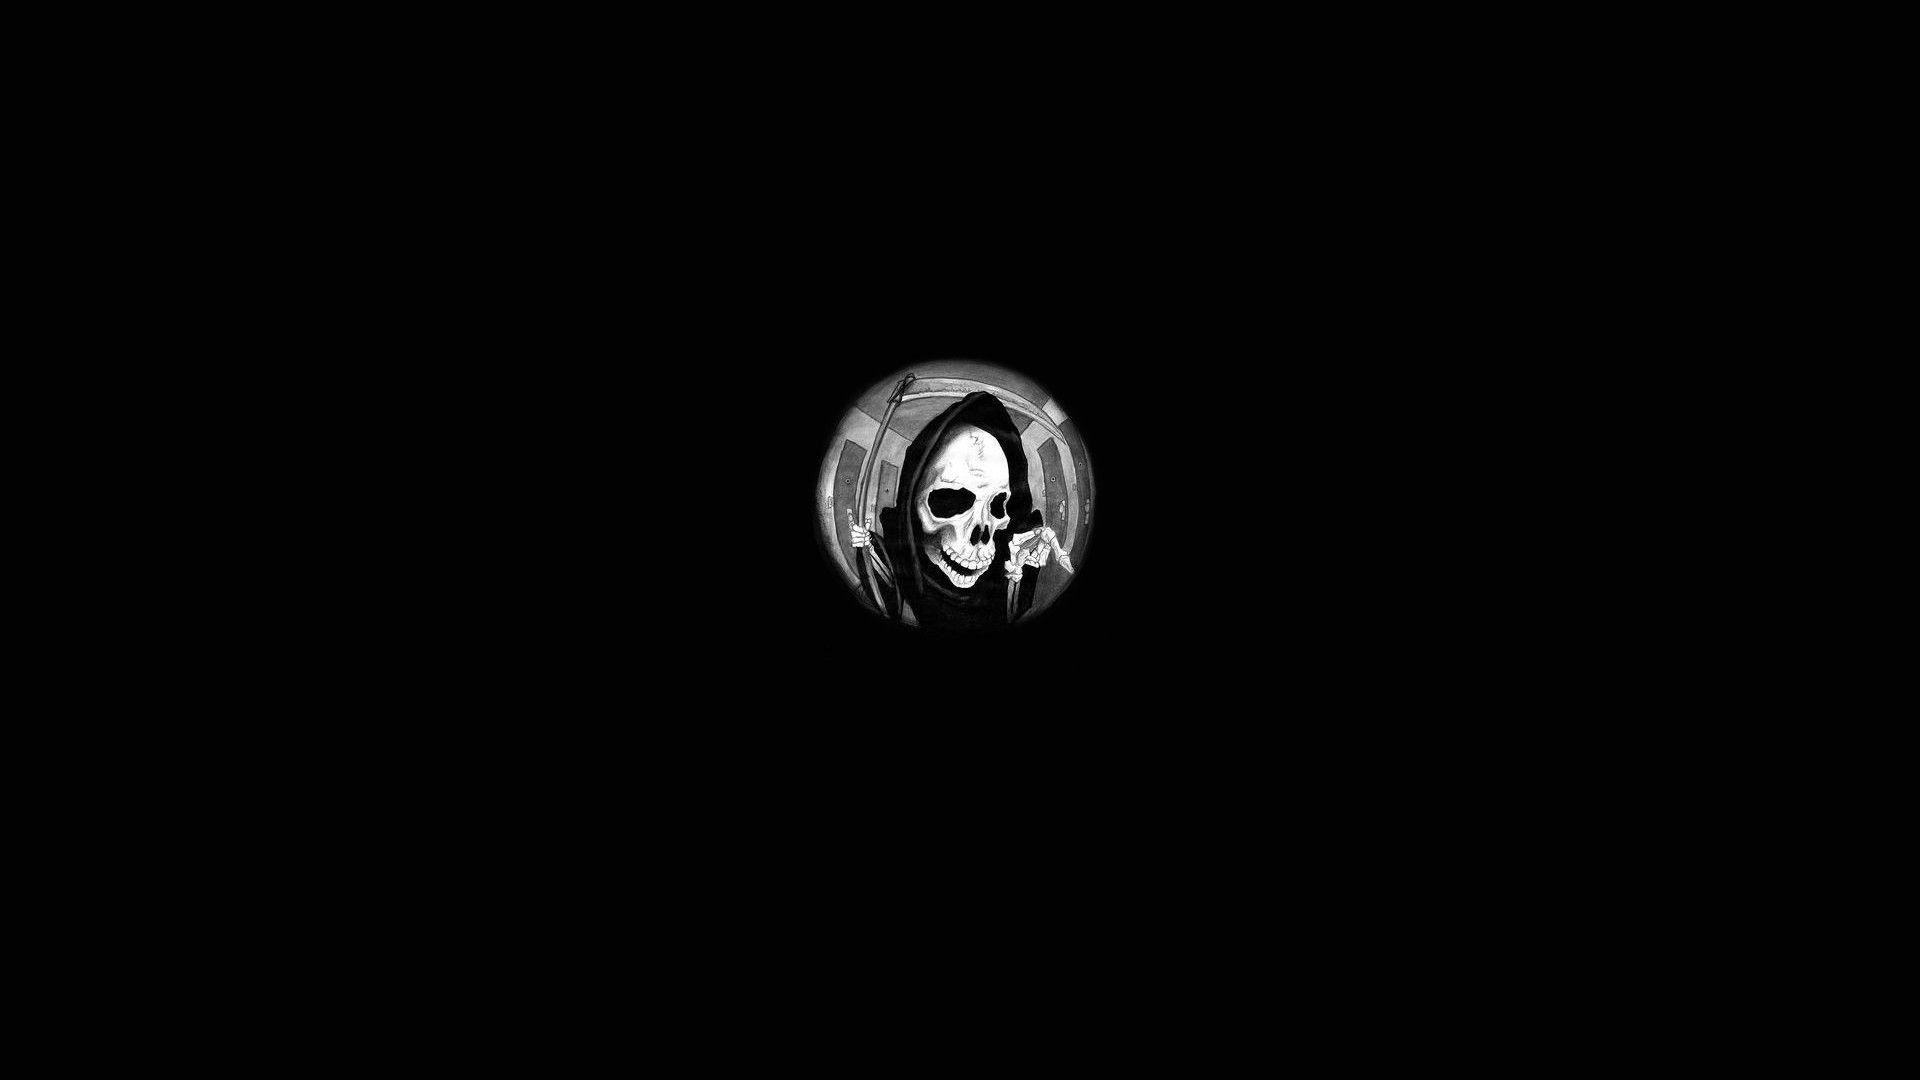 Grim Reaper Monochrome, HD Artist, 4k Wallpaper, Image